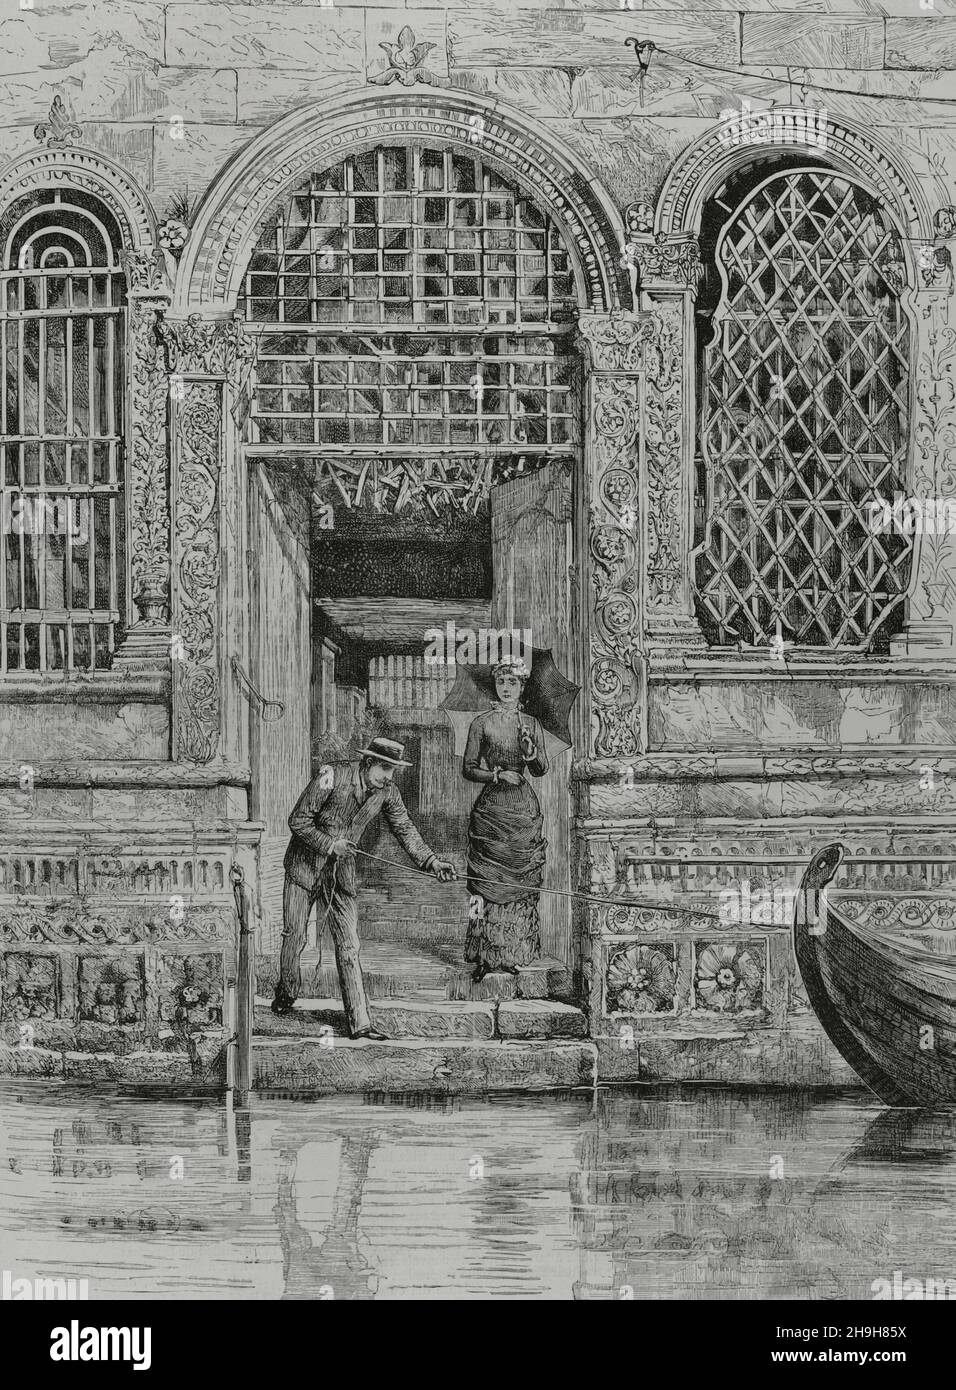 Italia. 'A Venezia'. Disegno originale di H. Quilter. Incisione. La Ilustración Española y americana, 1882. Foto Stock